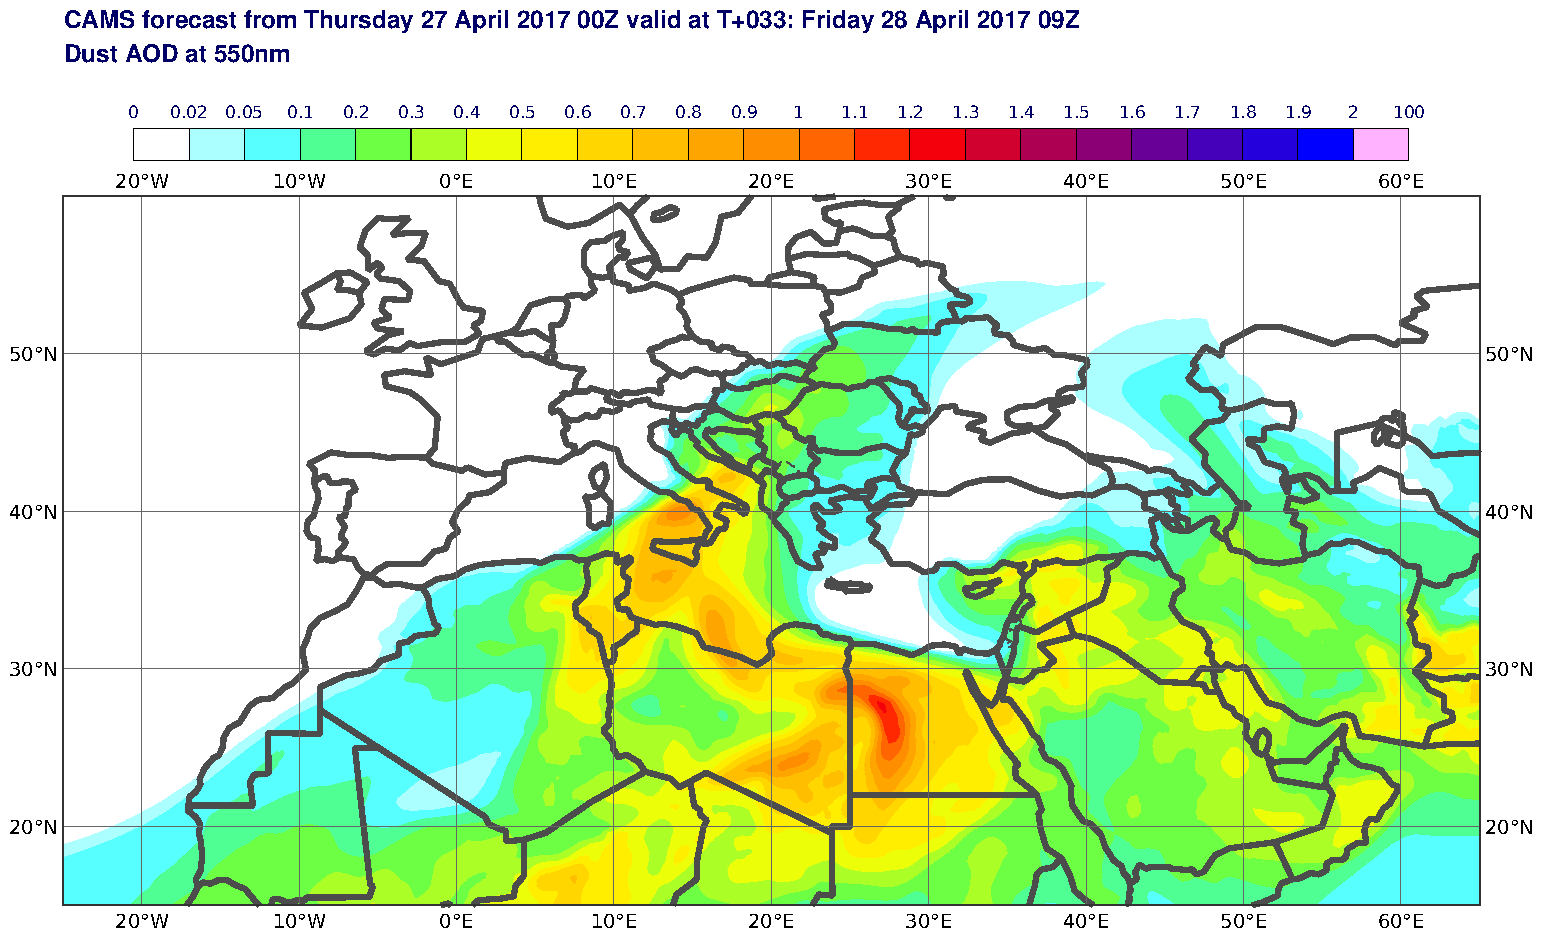 Dust AOD at 550nm valid at T33 - 2017-04-28 09:00